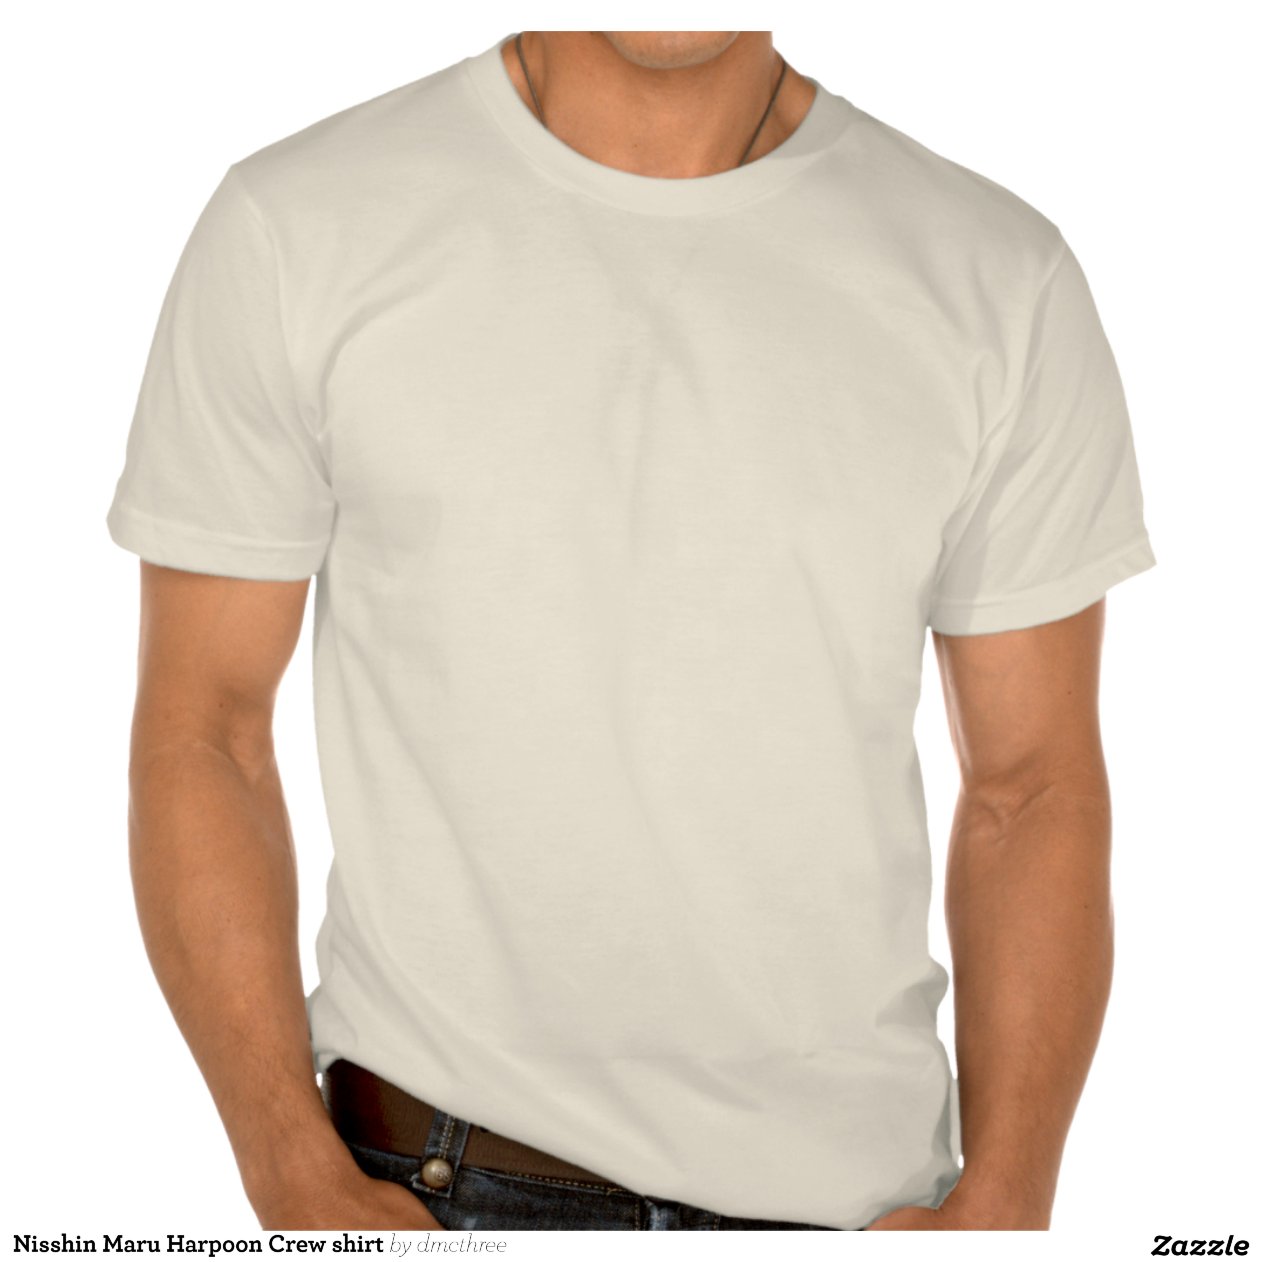 Футболка натурал. Фирмы футболок. American Apparel футболки. Мужчина в светлой футболке. Фирма майк